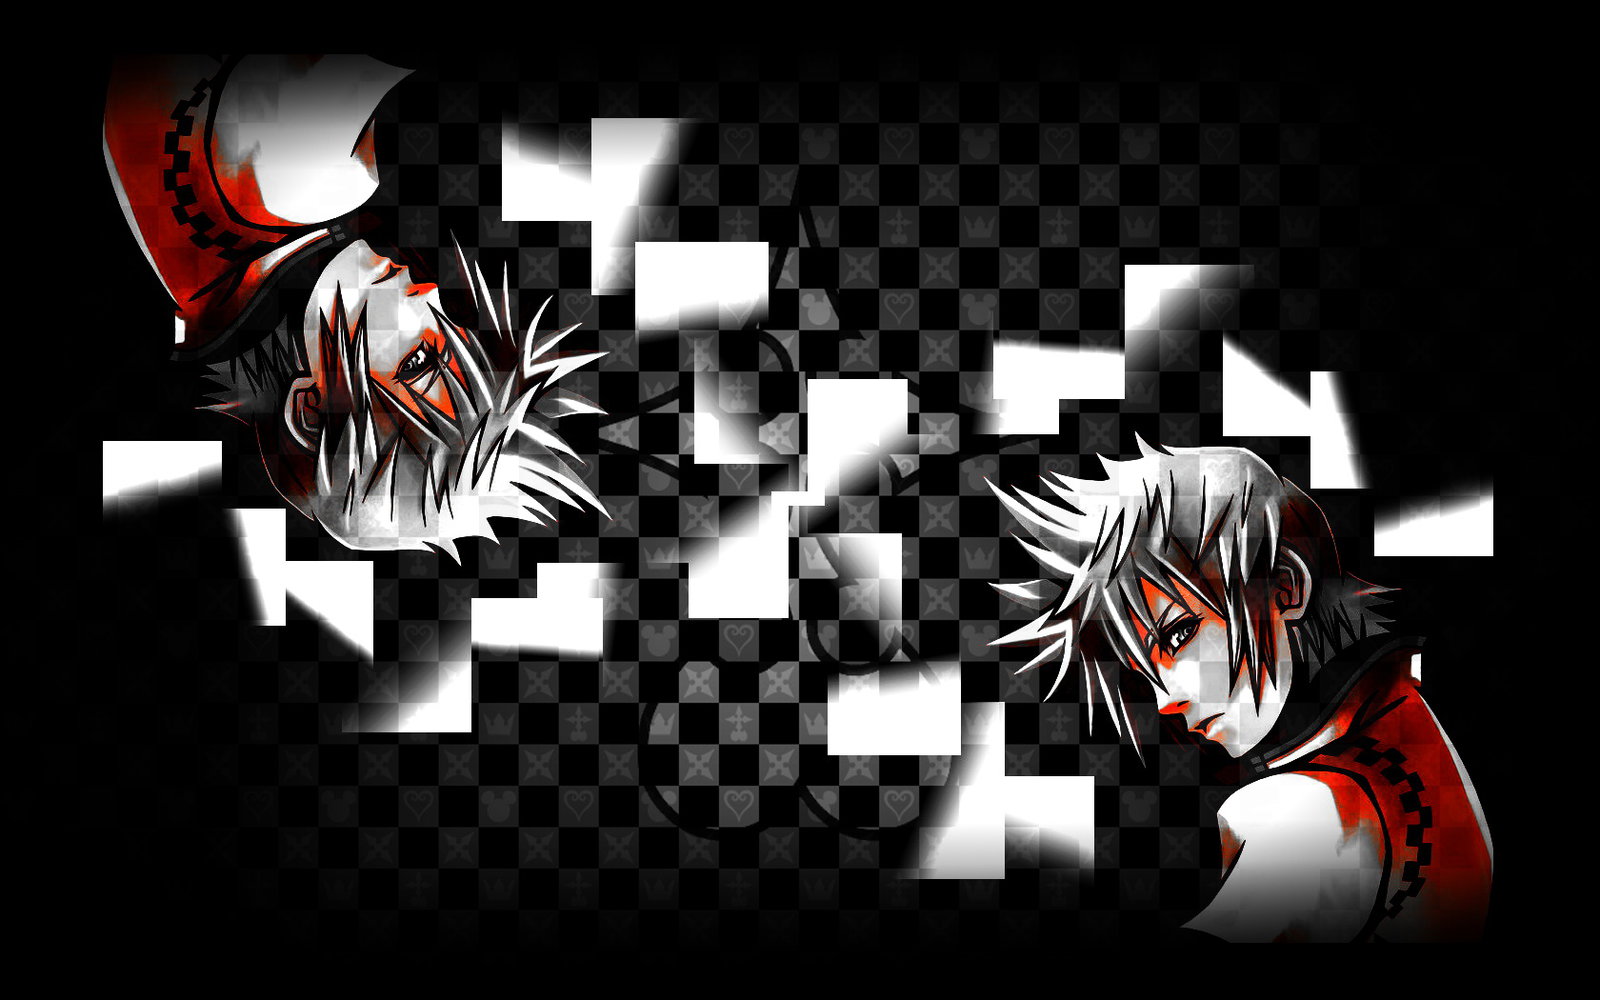 Kingdom Hearts Roxas Wallpaper by crane288 on deviantART